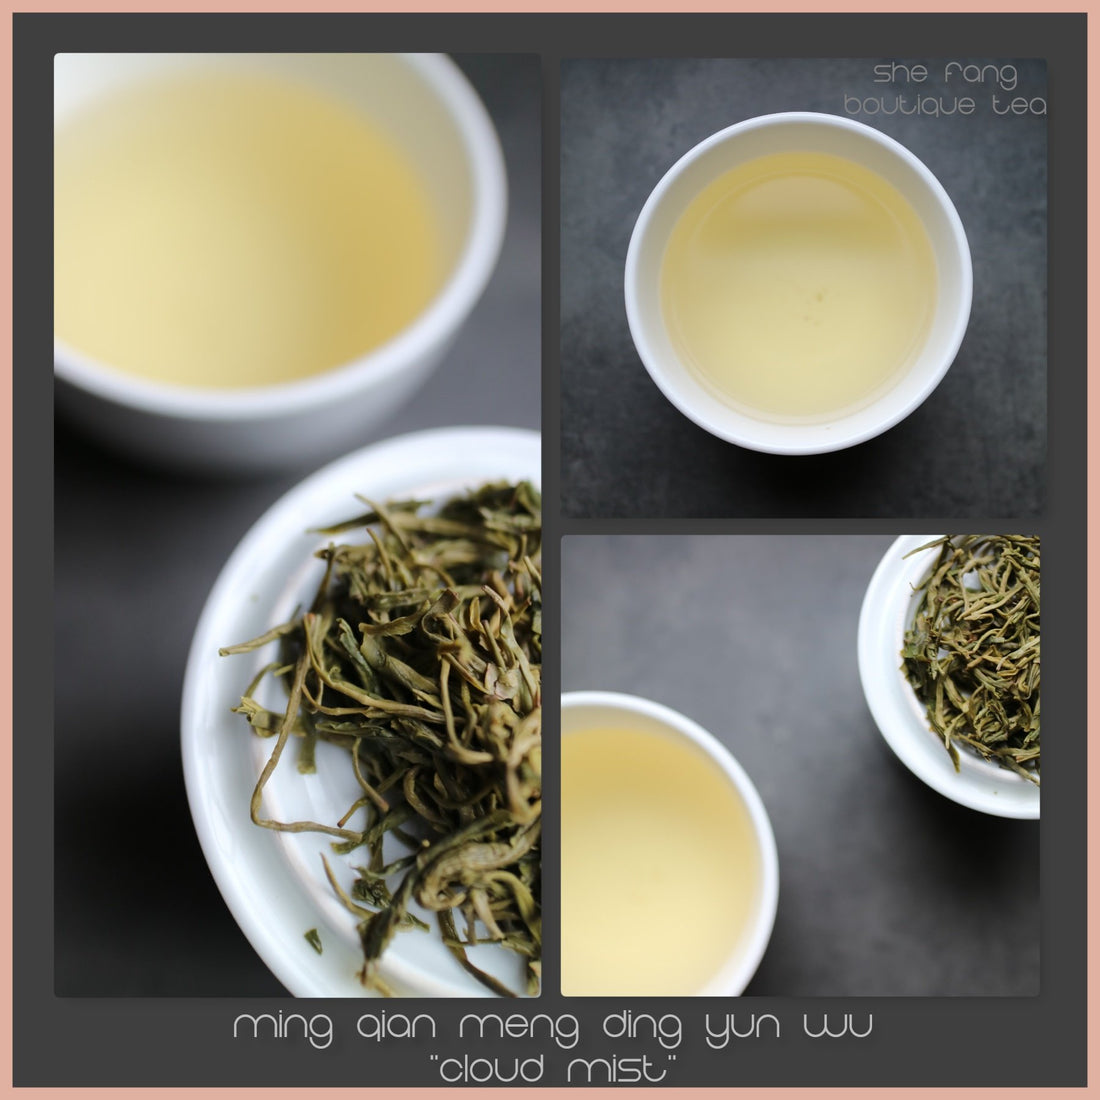 Tasting Notes – Meng Ding Yun Wu “Cloud Mist” - She Fang Boutique Tea